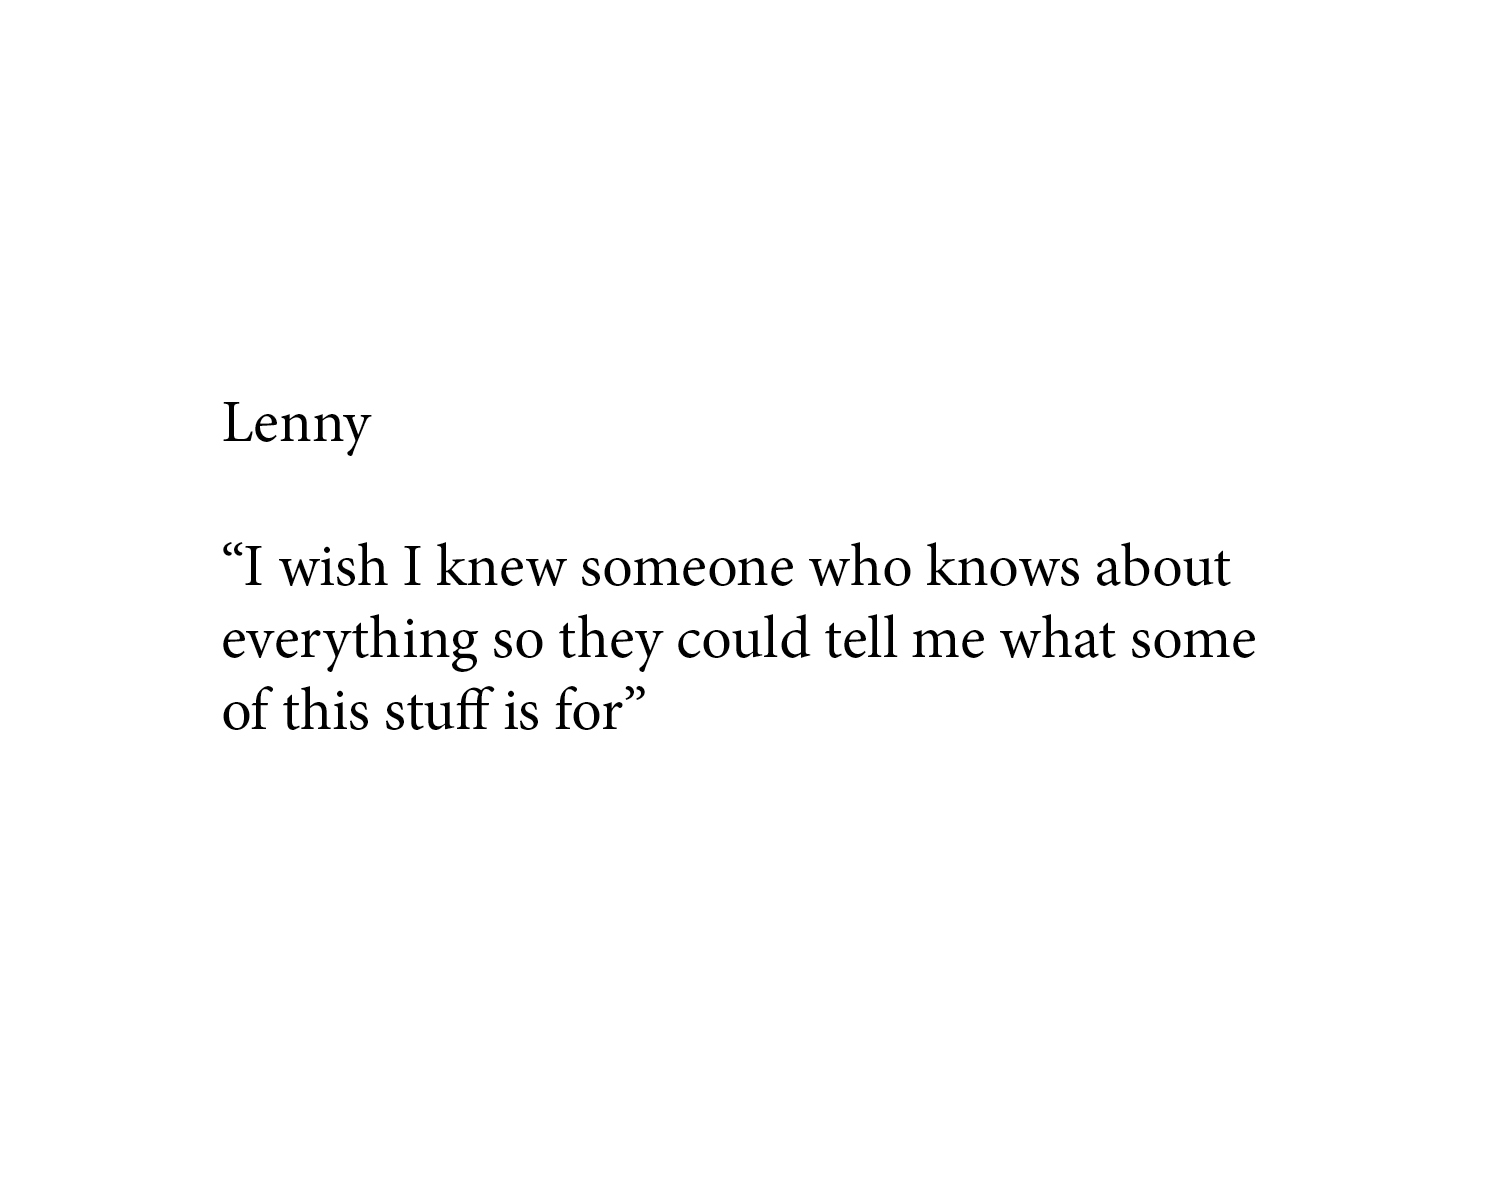 Lenny.jpg